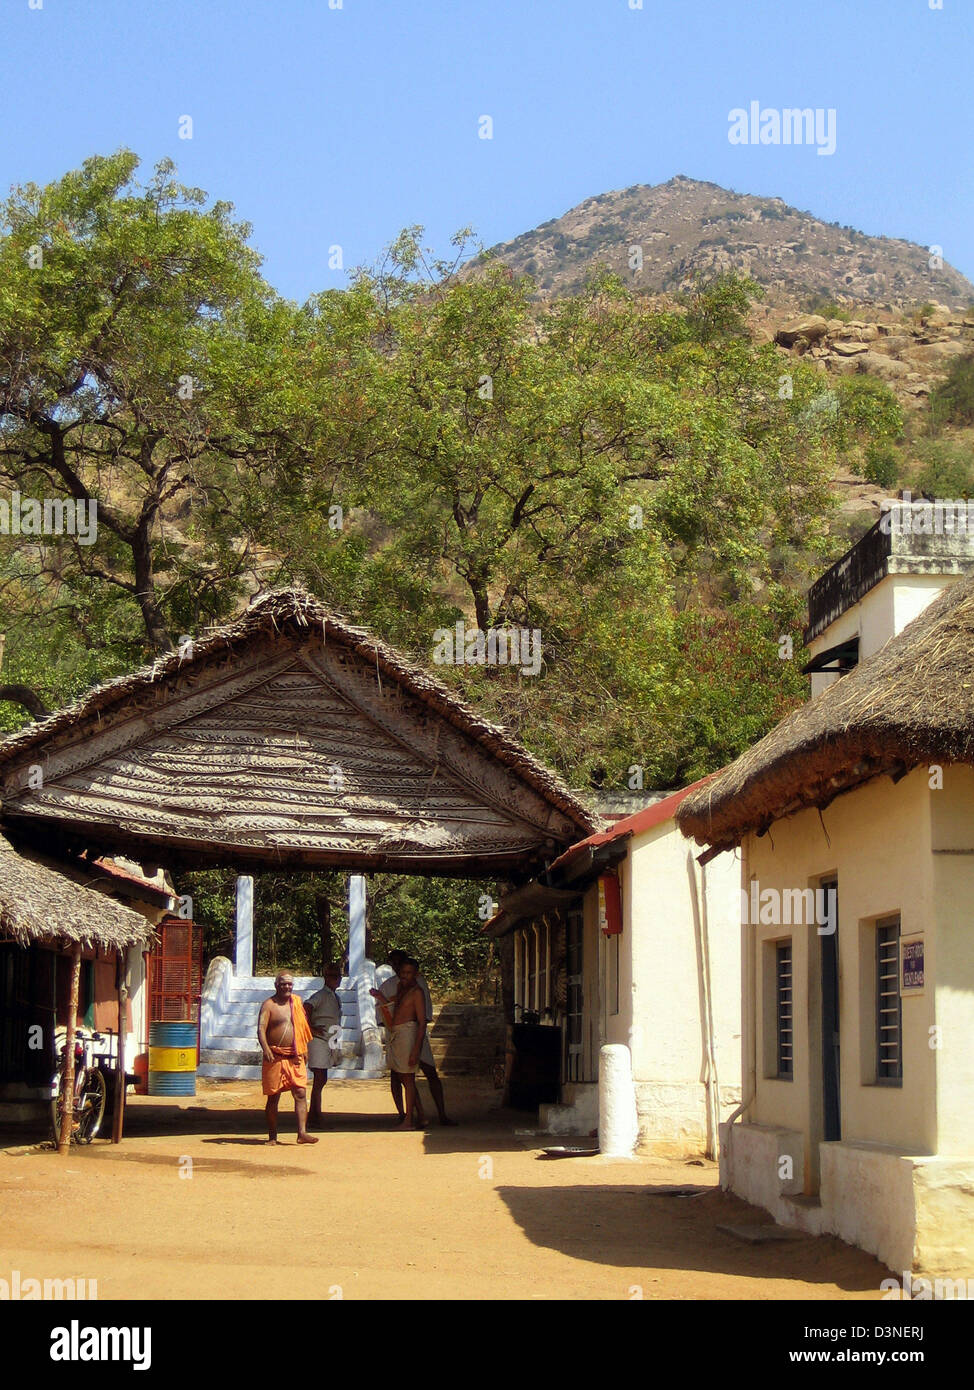 (dpa file) - The picture shows the pilgrims' centre Sri Ramanasramam at ...